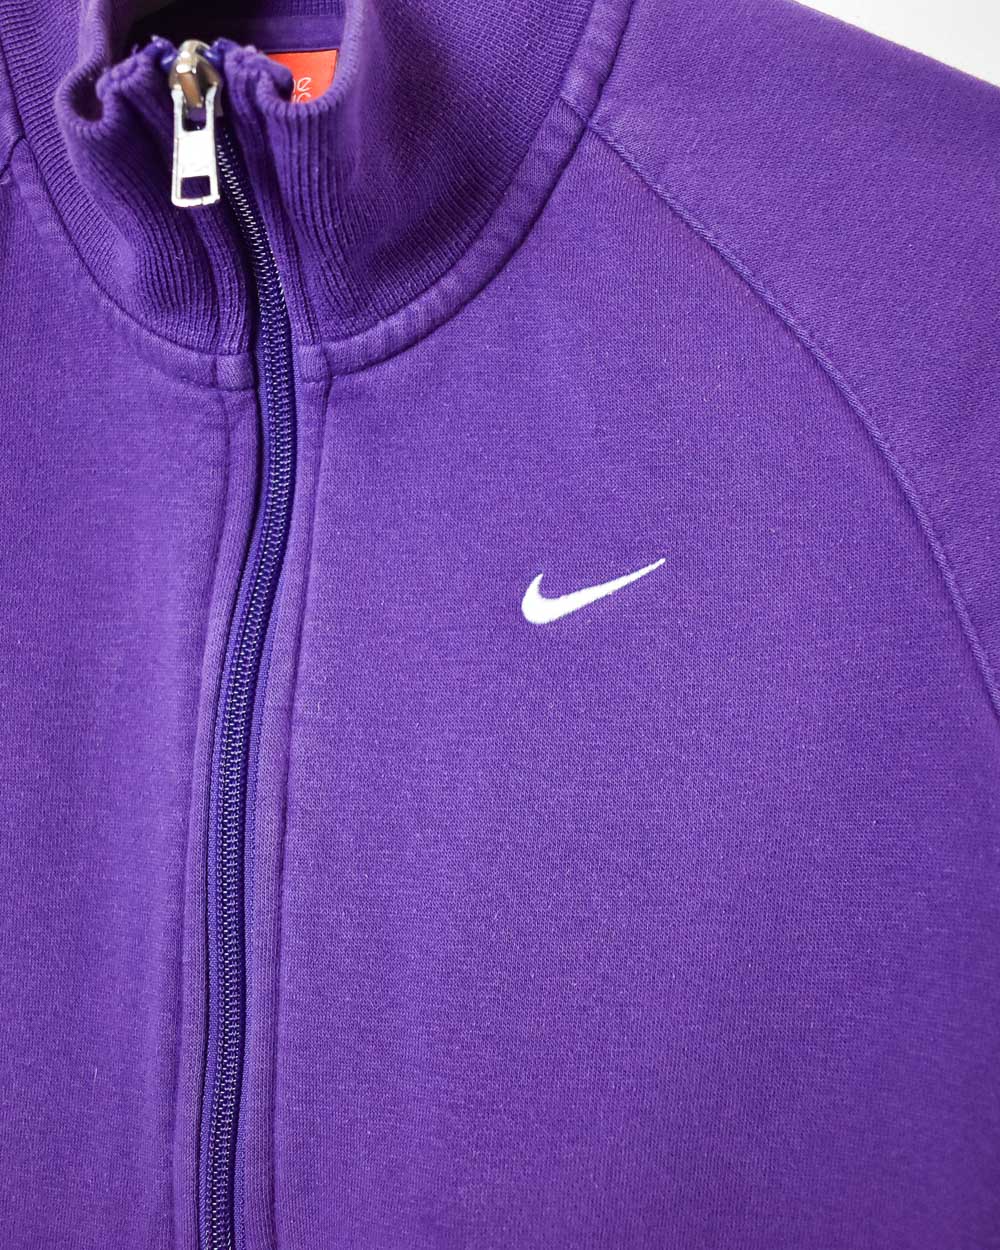 Purple Nike Athletic Dept 1/4 Zip Sweatshirt - Small Women's